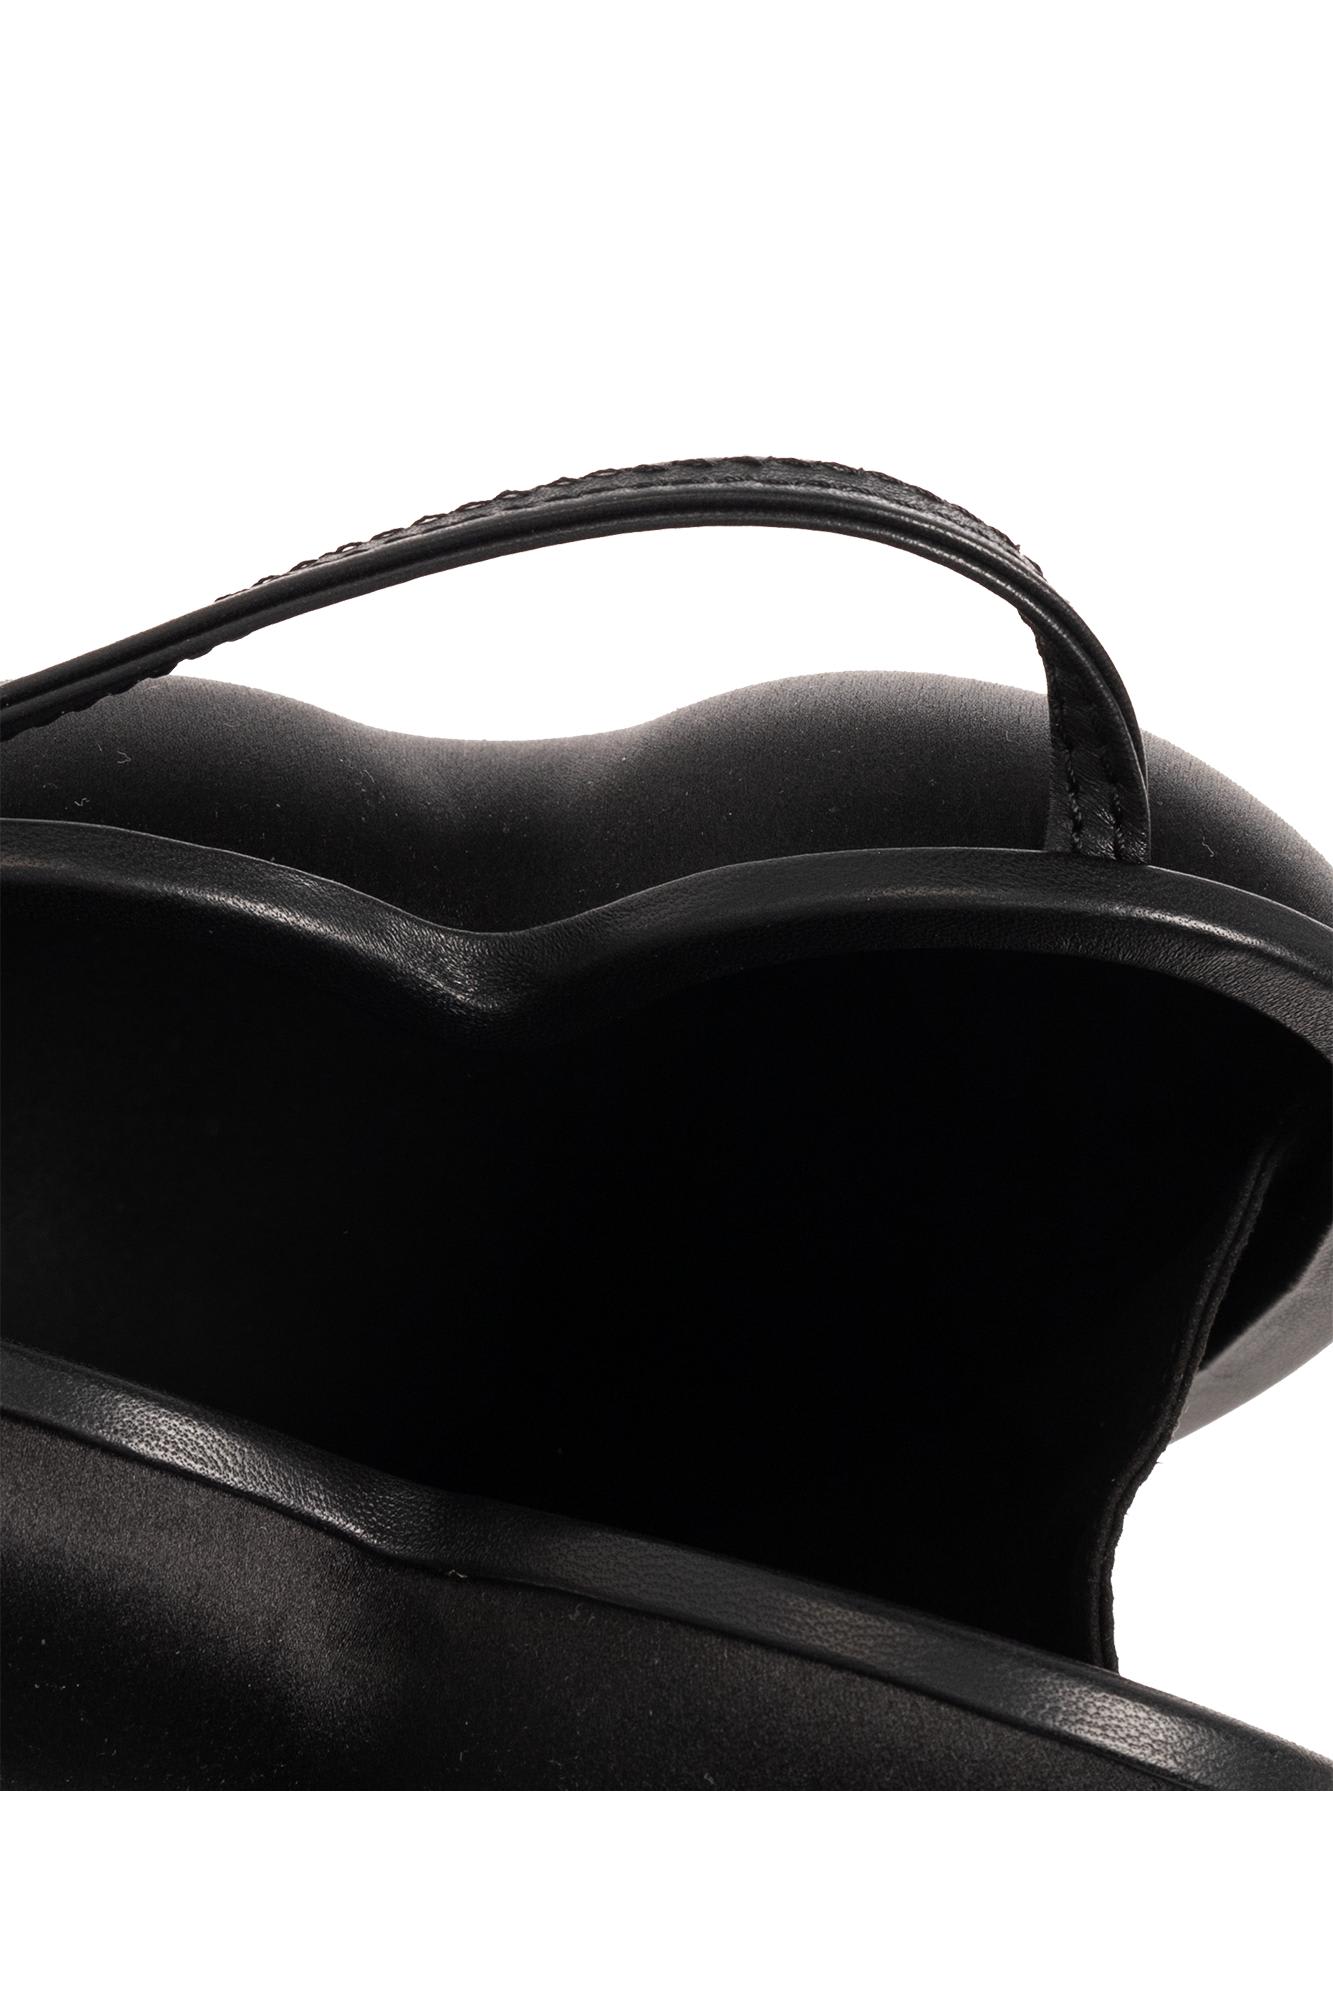 Shop Moschino Heart-shaped Shoulder Bag In Black